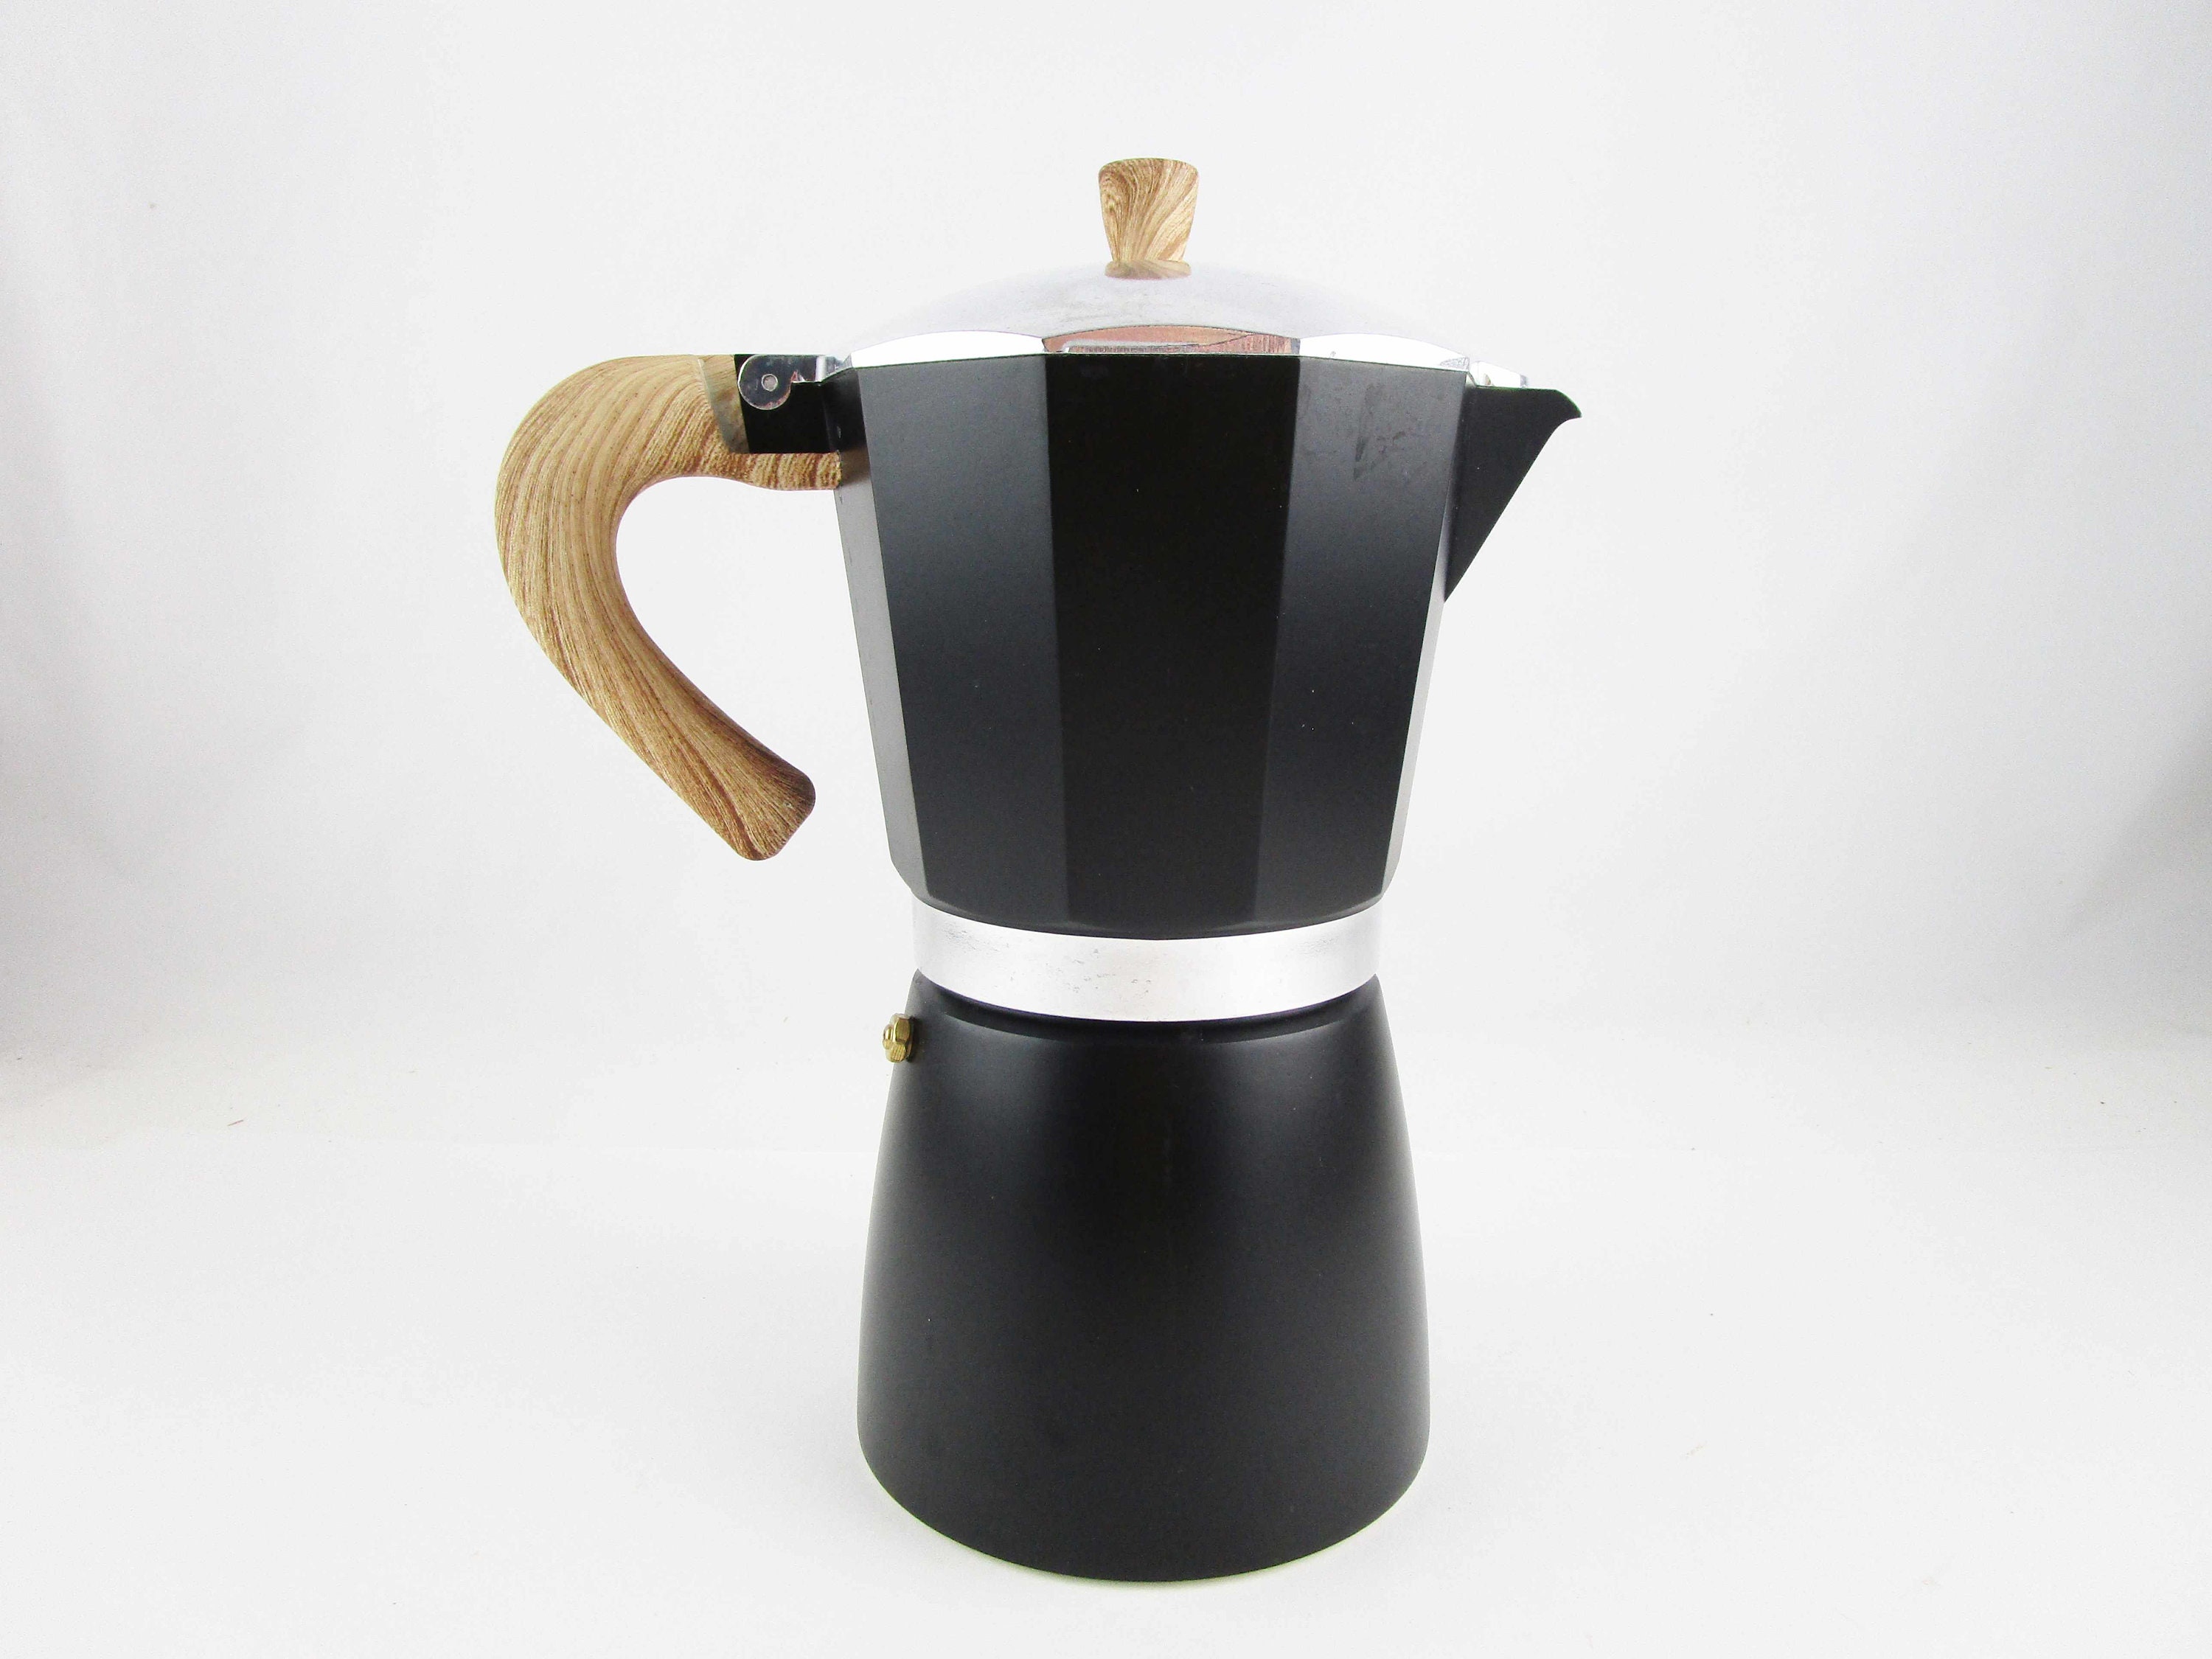 Gnali n Zani Moka pot Coffee Maker 6 Cups White with Wooden Handle